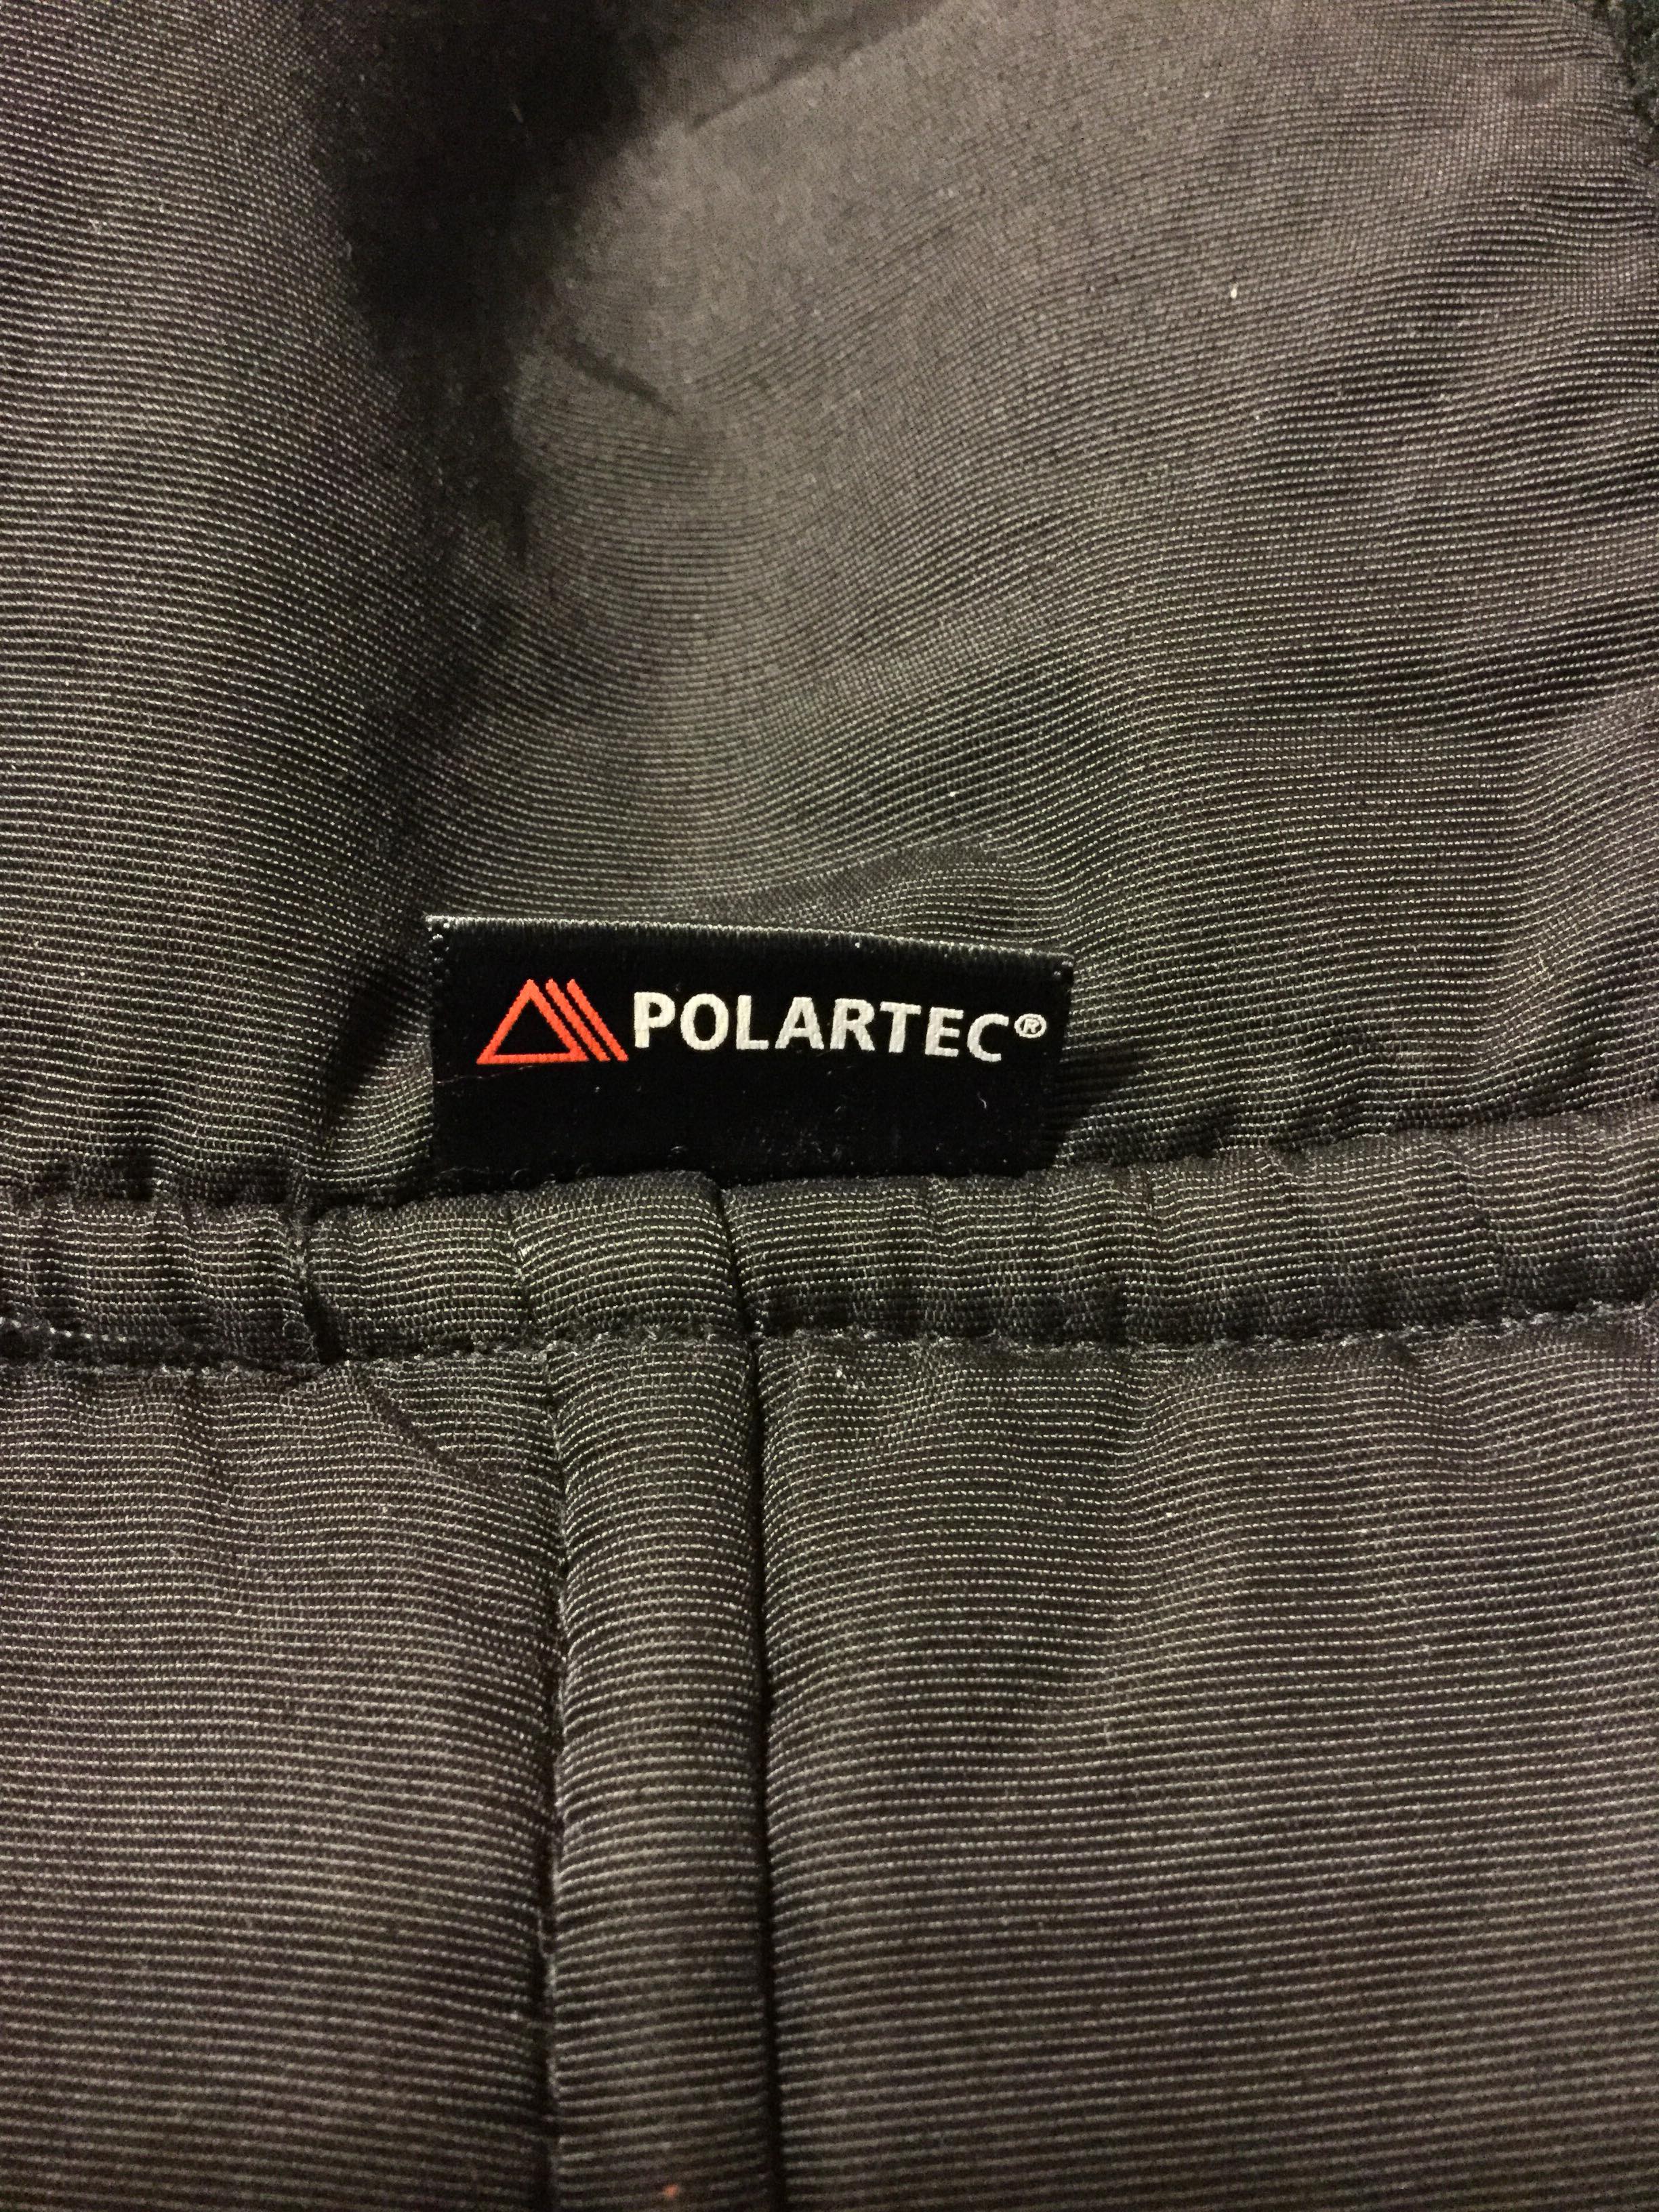 2017 Supreme Polartec Fleece Hooded Half Zip Pullover Black | Jwong